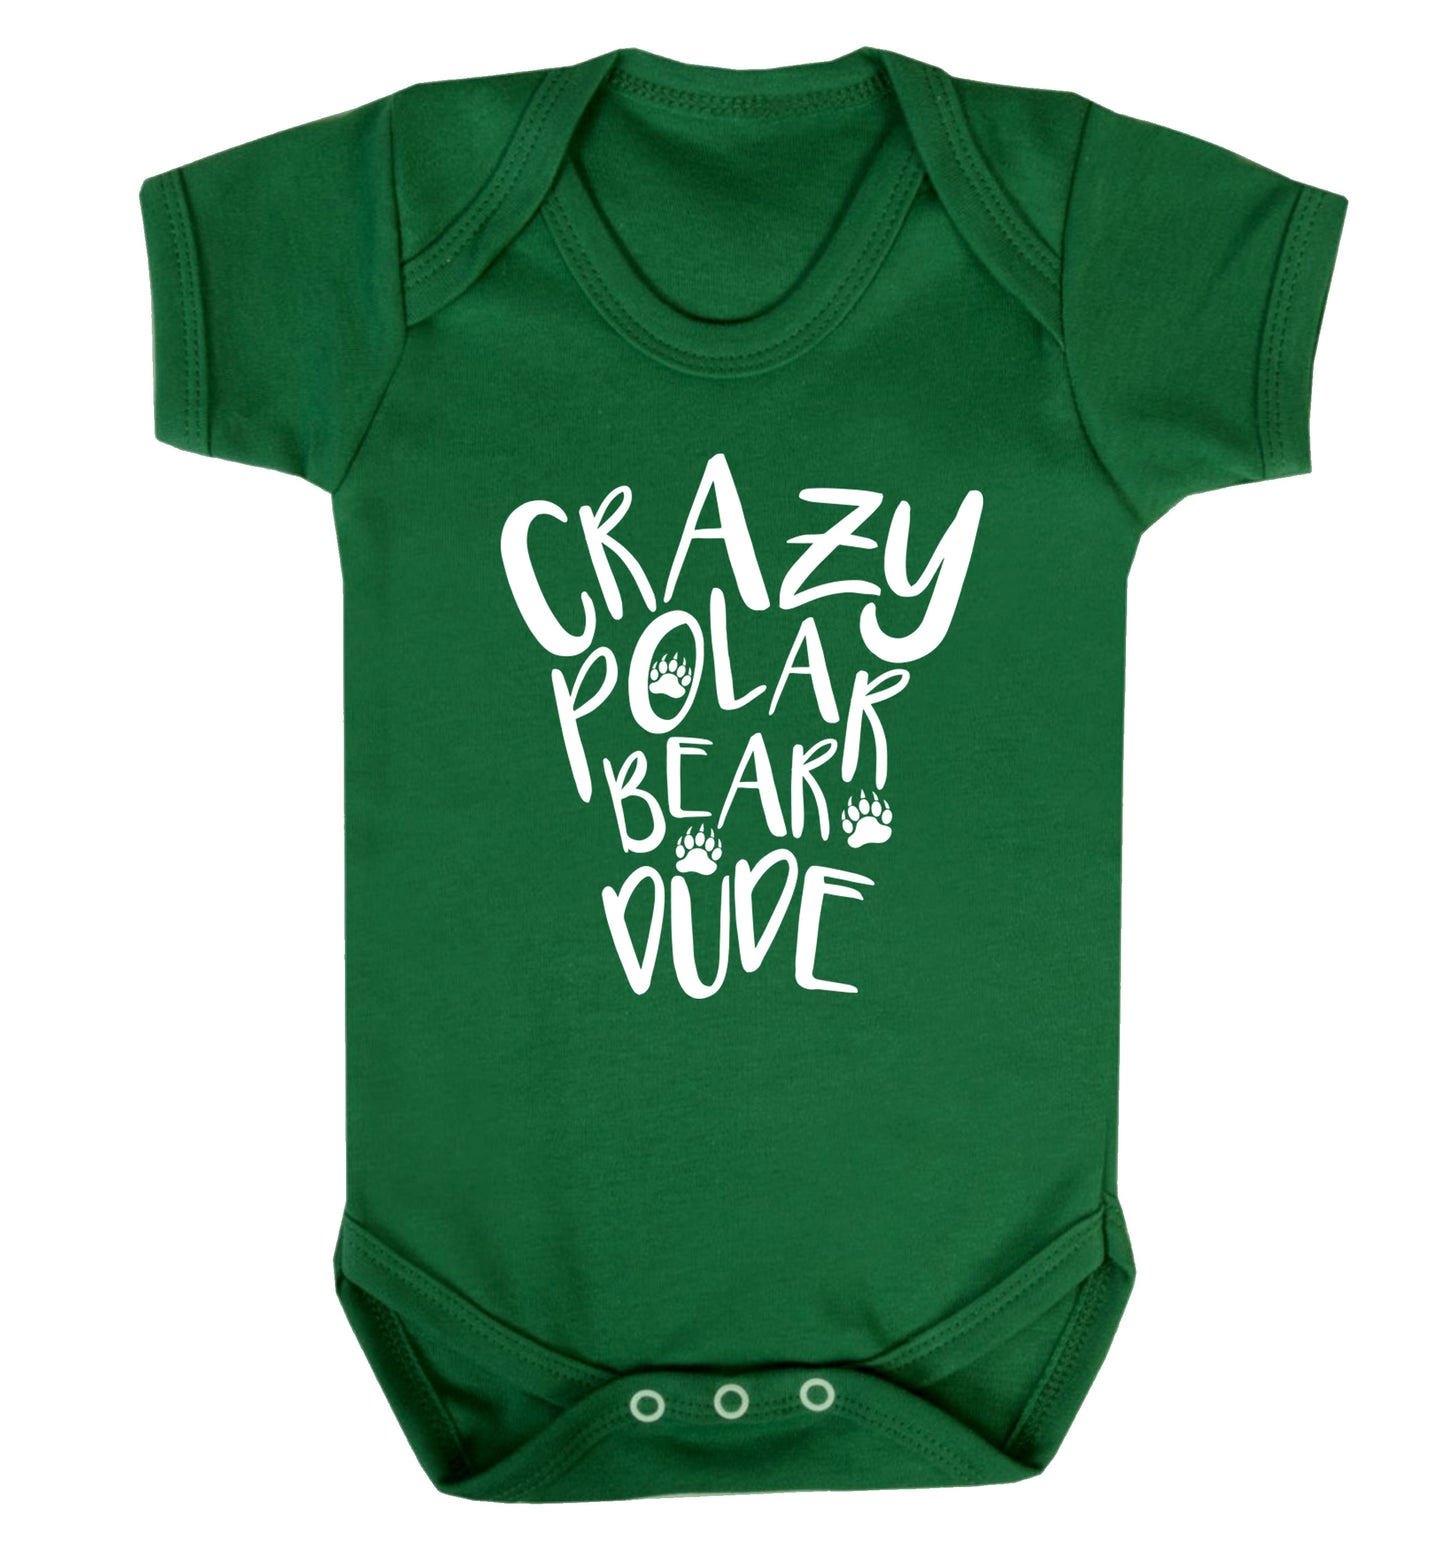 Crazy polar bear dude Baby Vest green 18-24 months